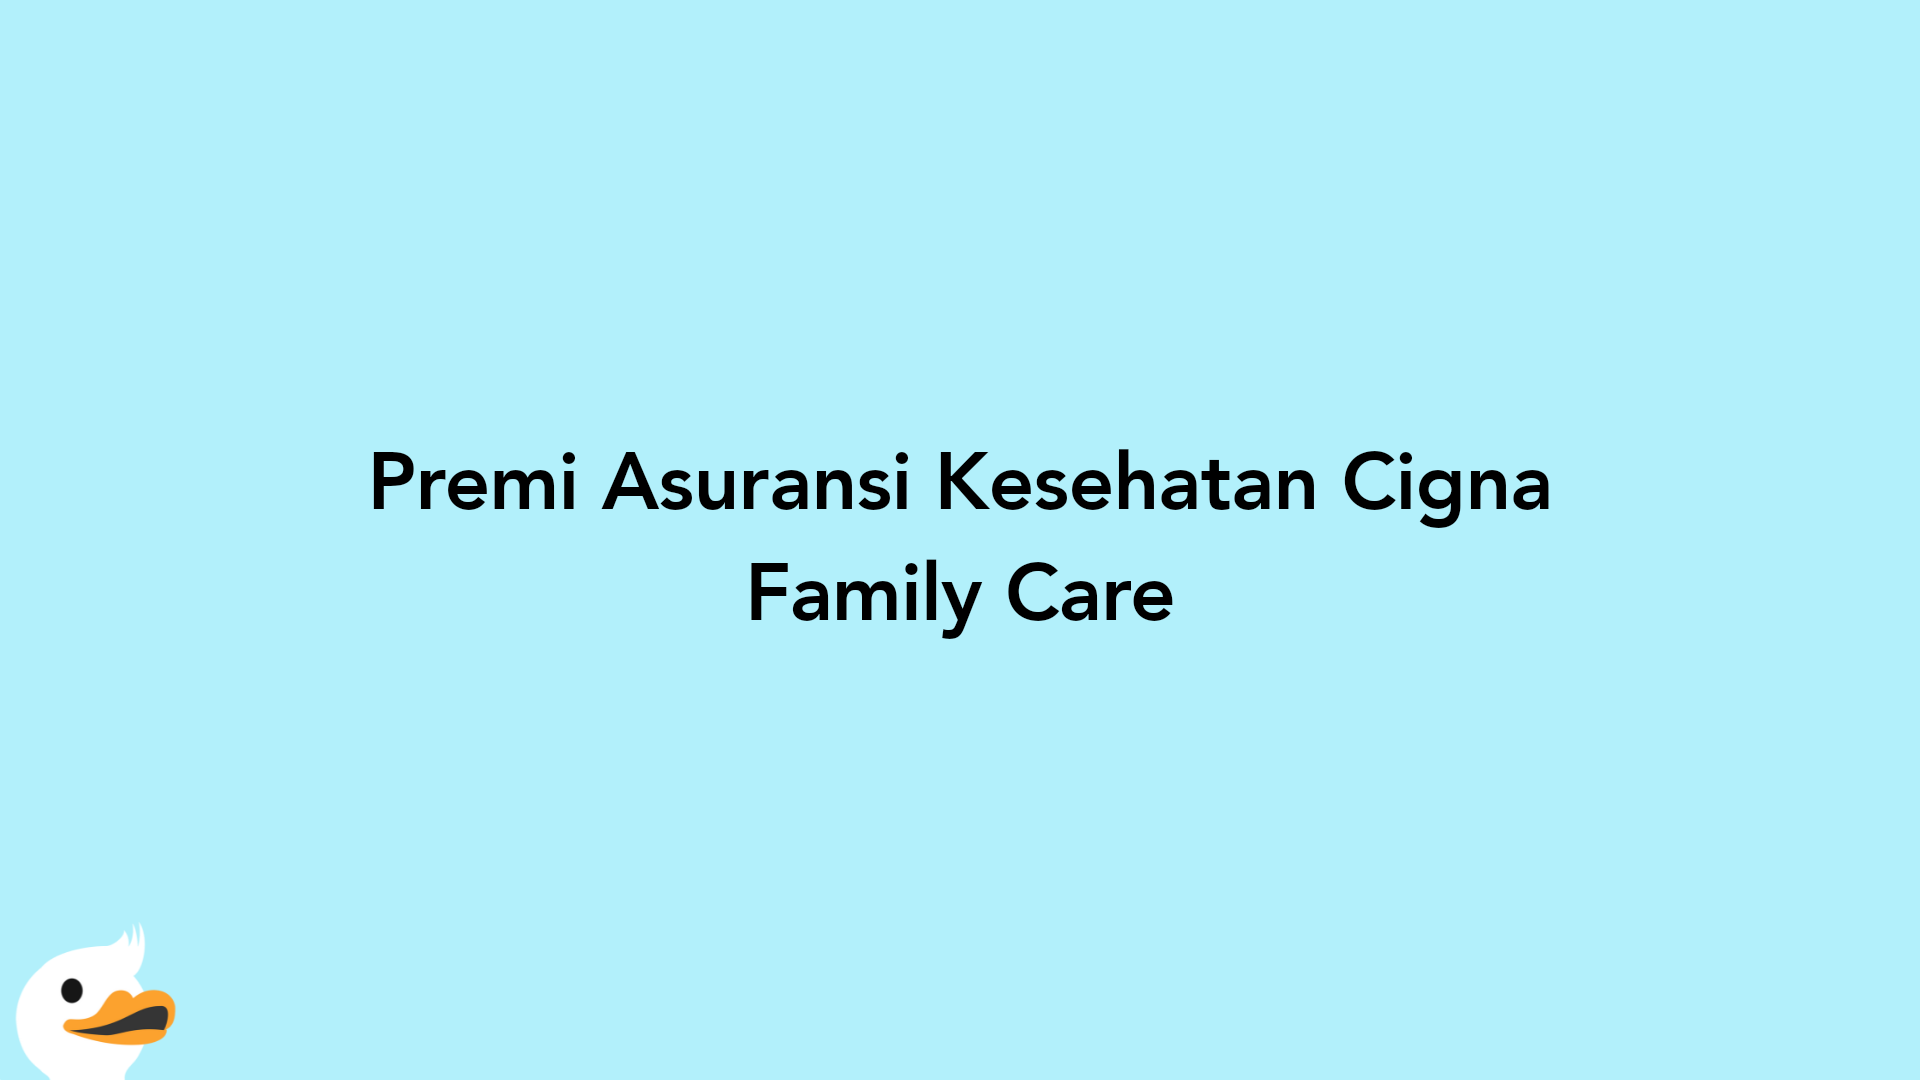 Premi Asuransi Kesehatan Cigna Family Care